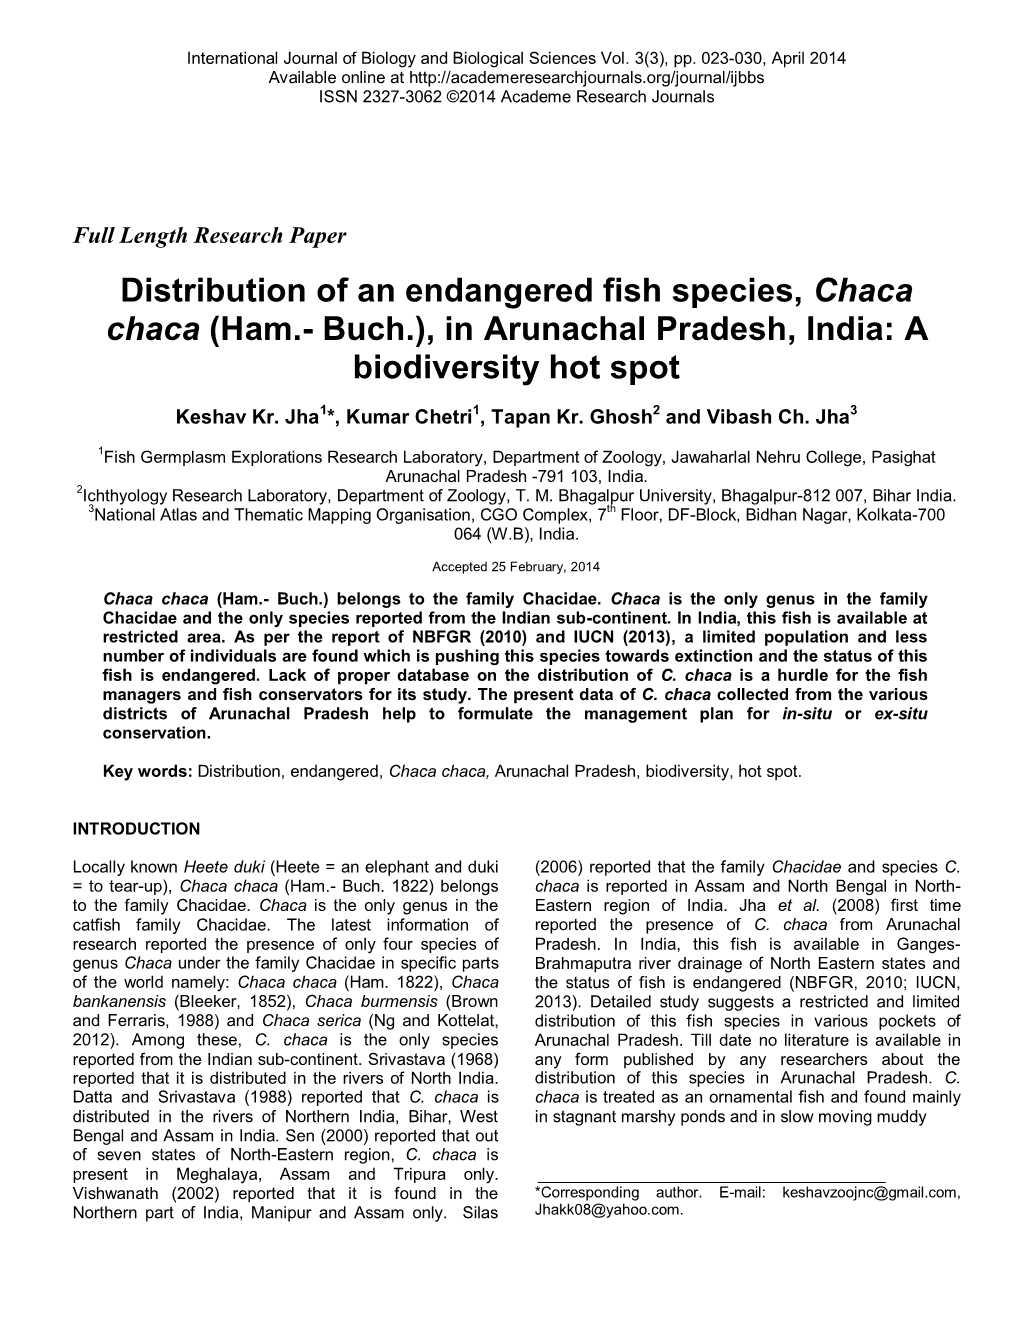 Distribution of an Endangered Fish Species, Chaca Chaca (Ham.- Buch.), in Arunachal Pradesh, India: a Biodiversity Hot Spot